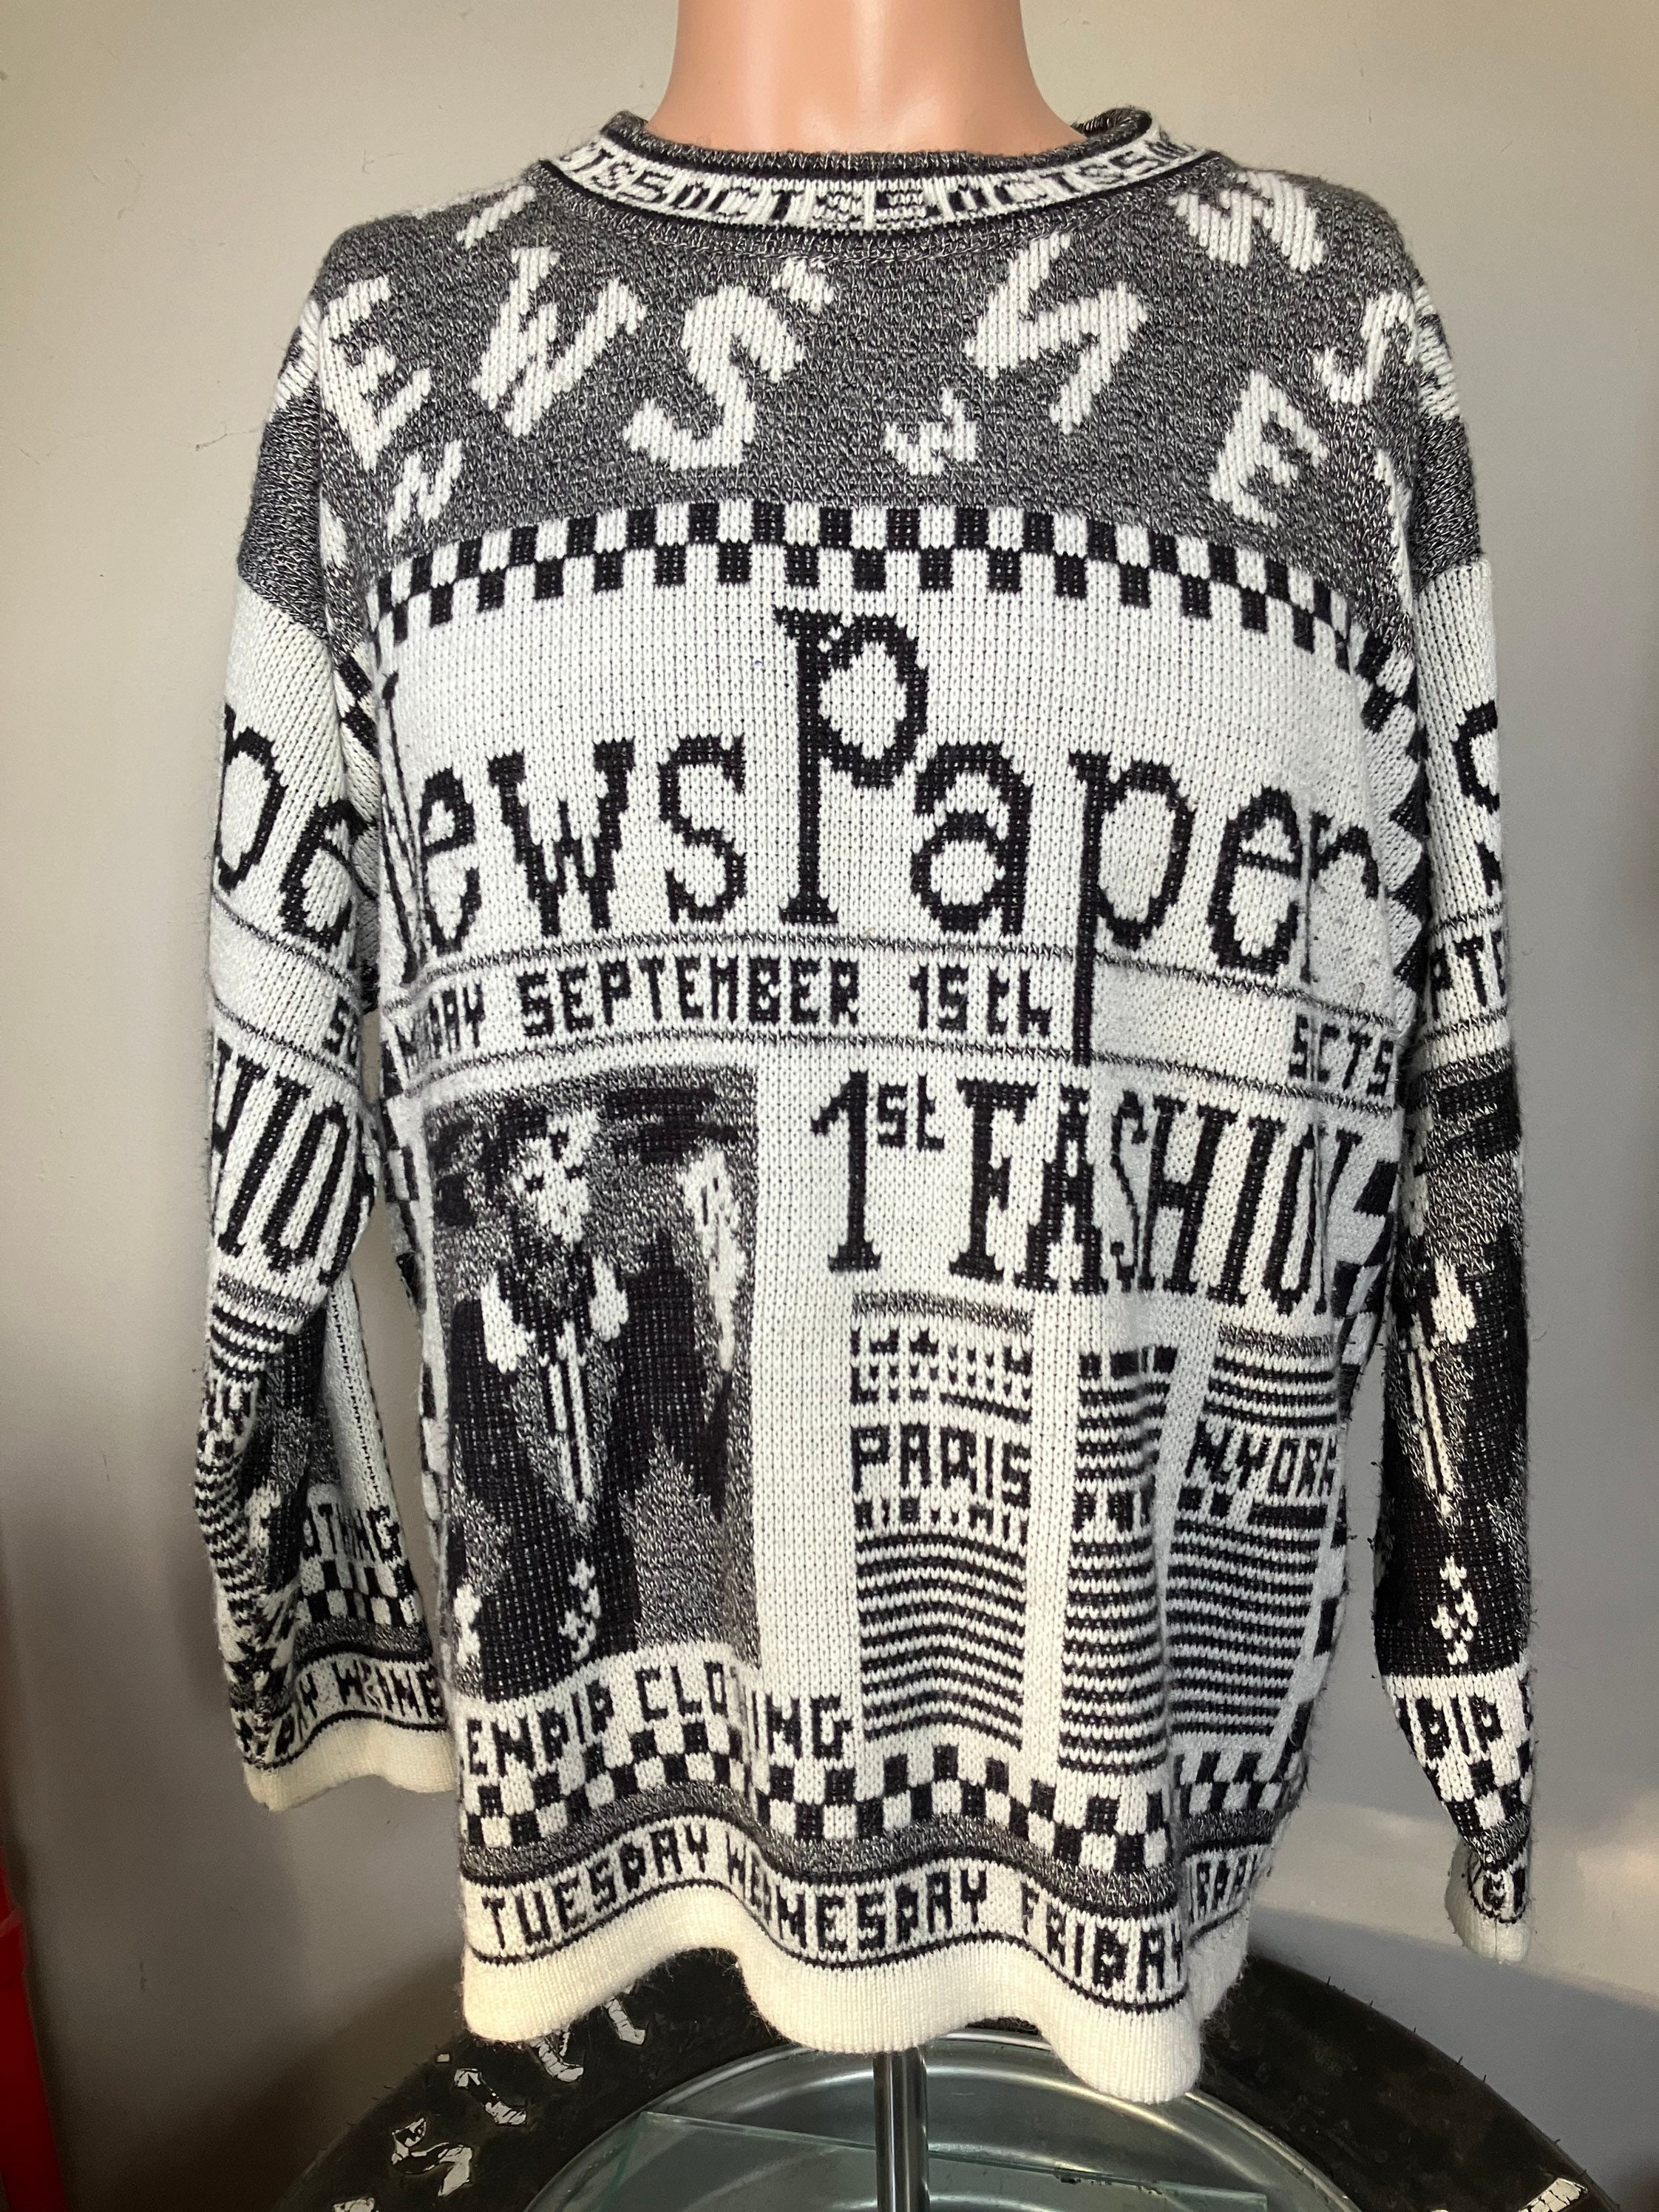 EverlyGrayce Monogrammed Fleece Quarter Zip Pullover Sweatshirt, Christmas Gifts for Her Under 30 D1